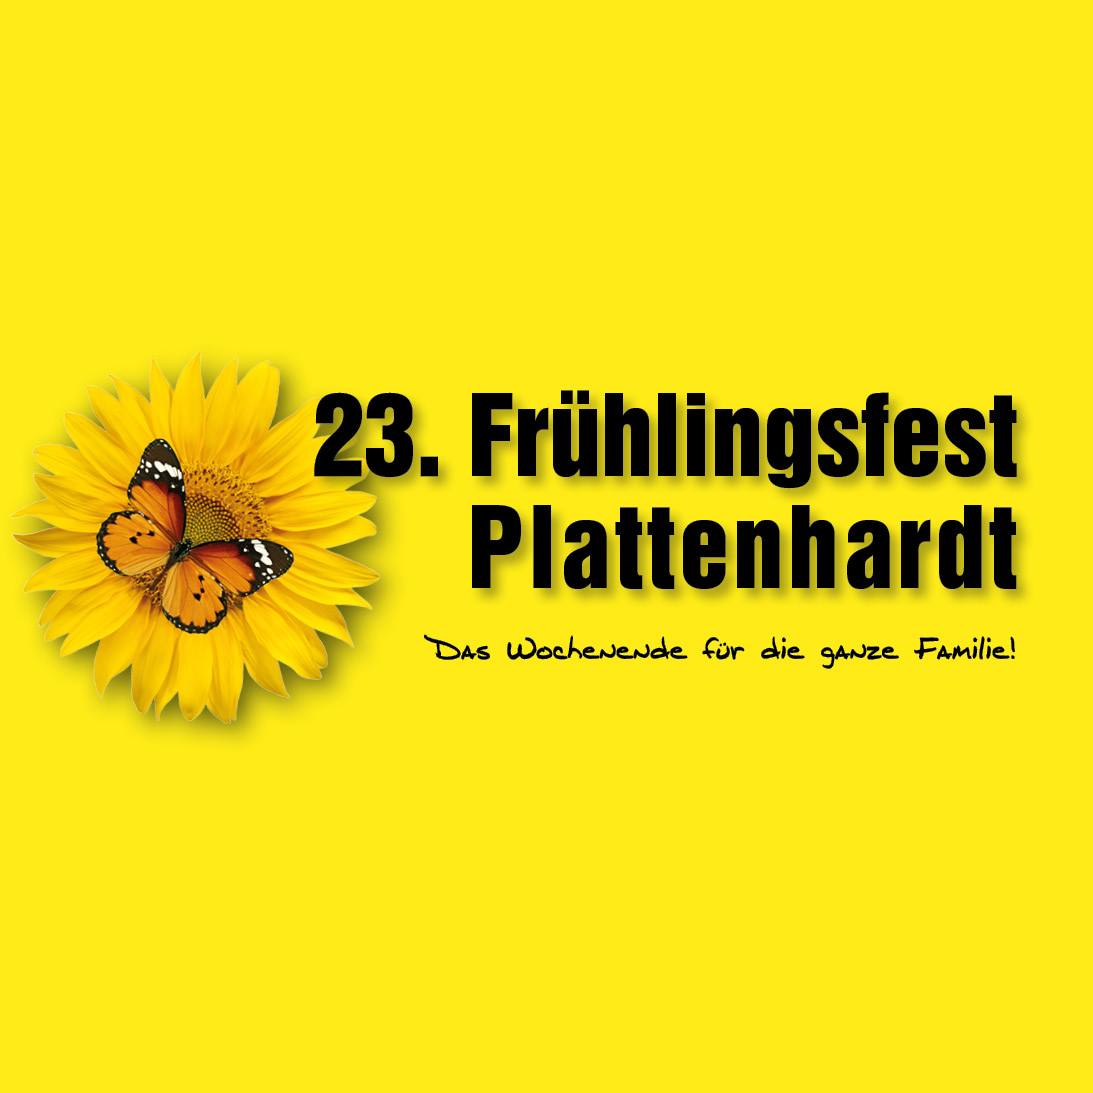 (c) Fruehlingsfest-plattenhardt.de